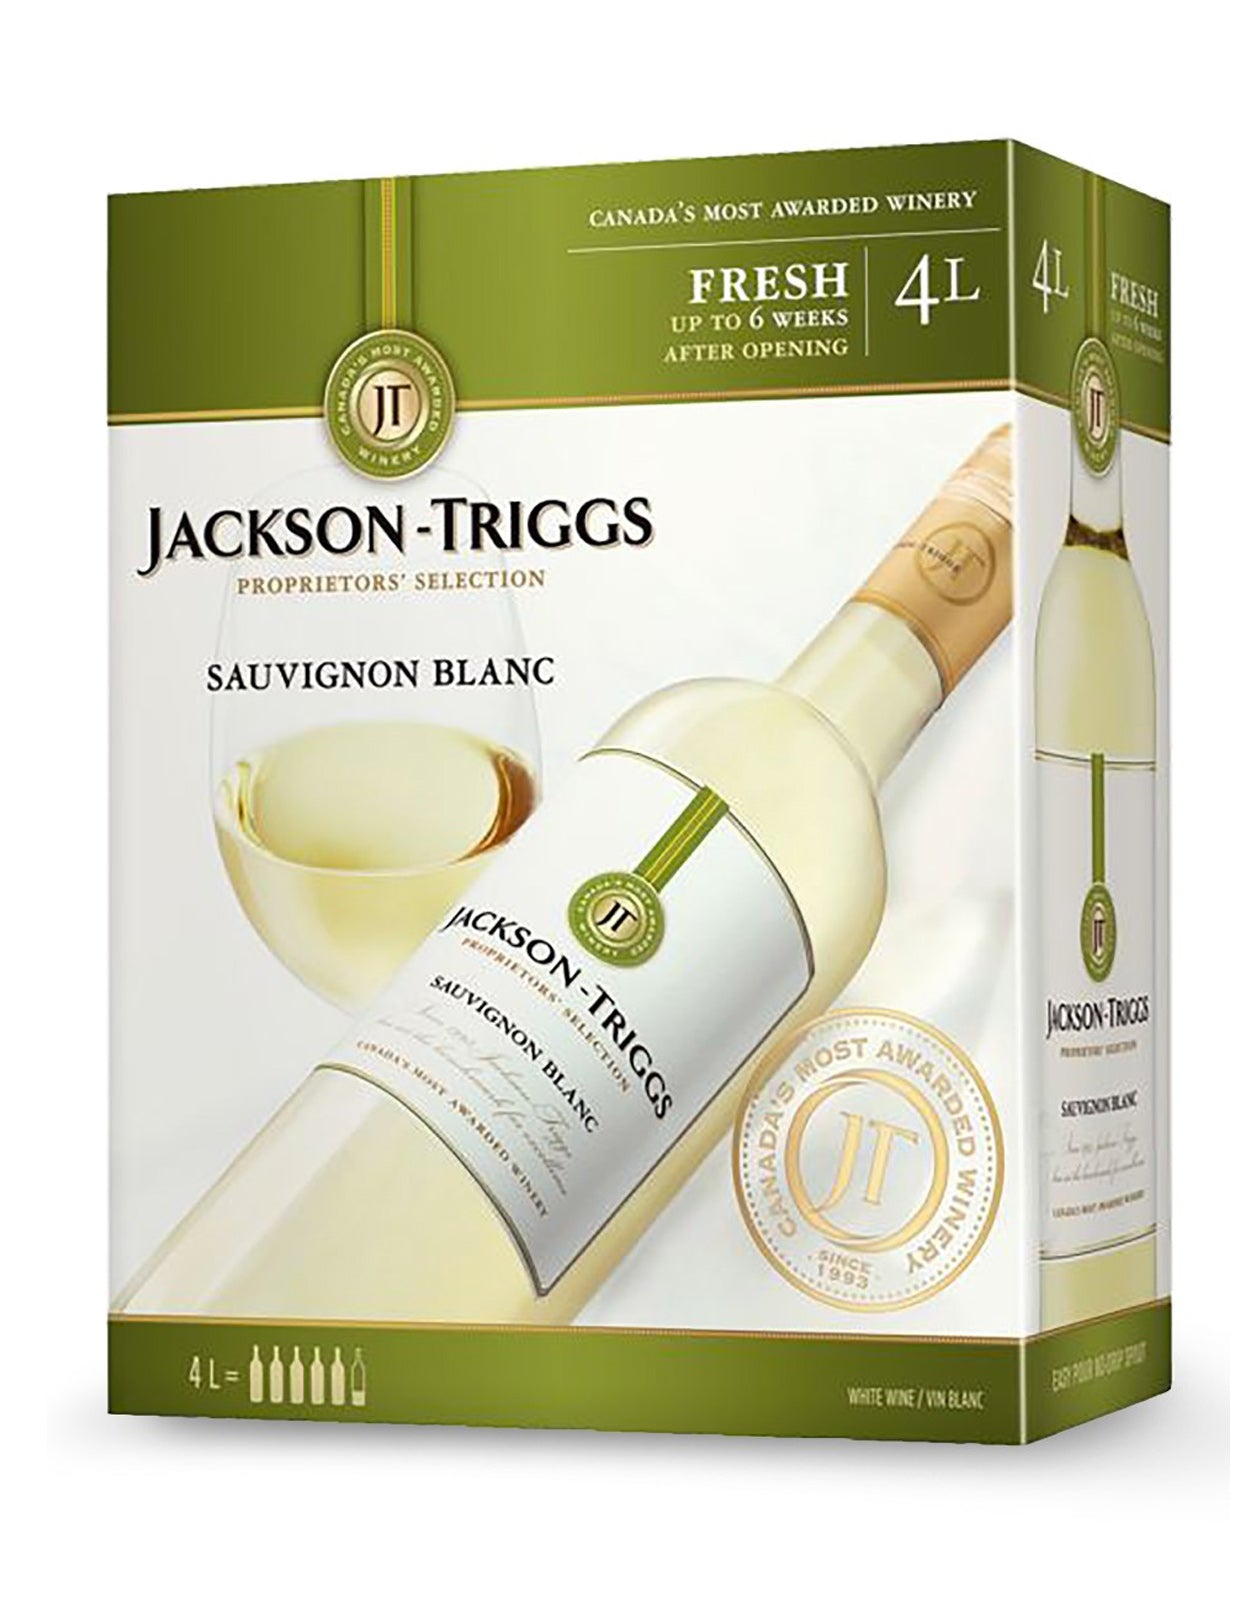 Jackson Triggs Sauvignon Blanc Proprietor's Select - 4 Litre Box (NV)